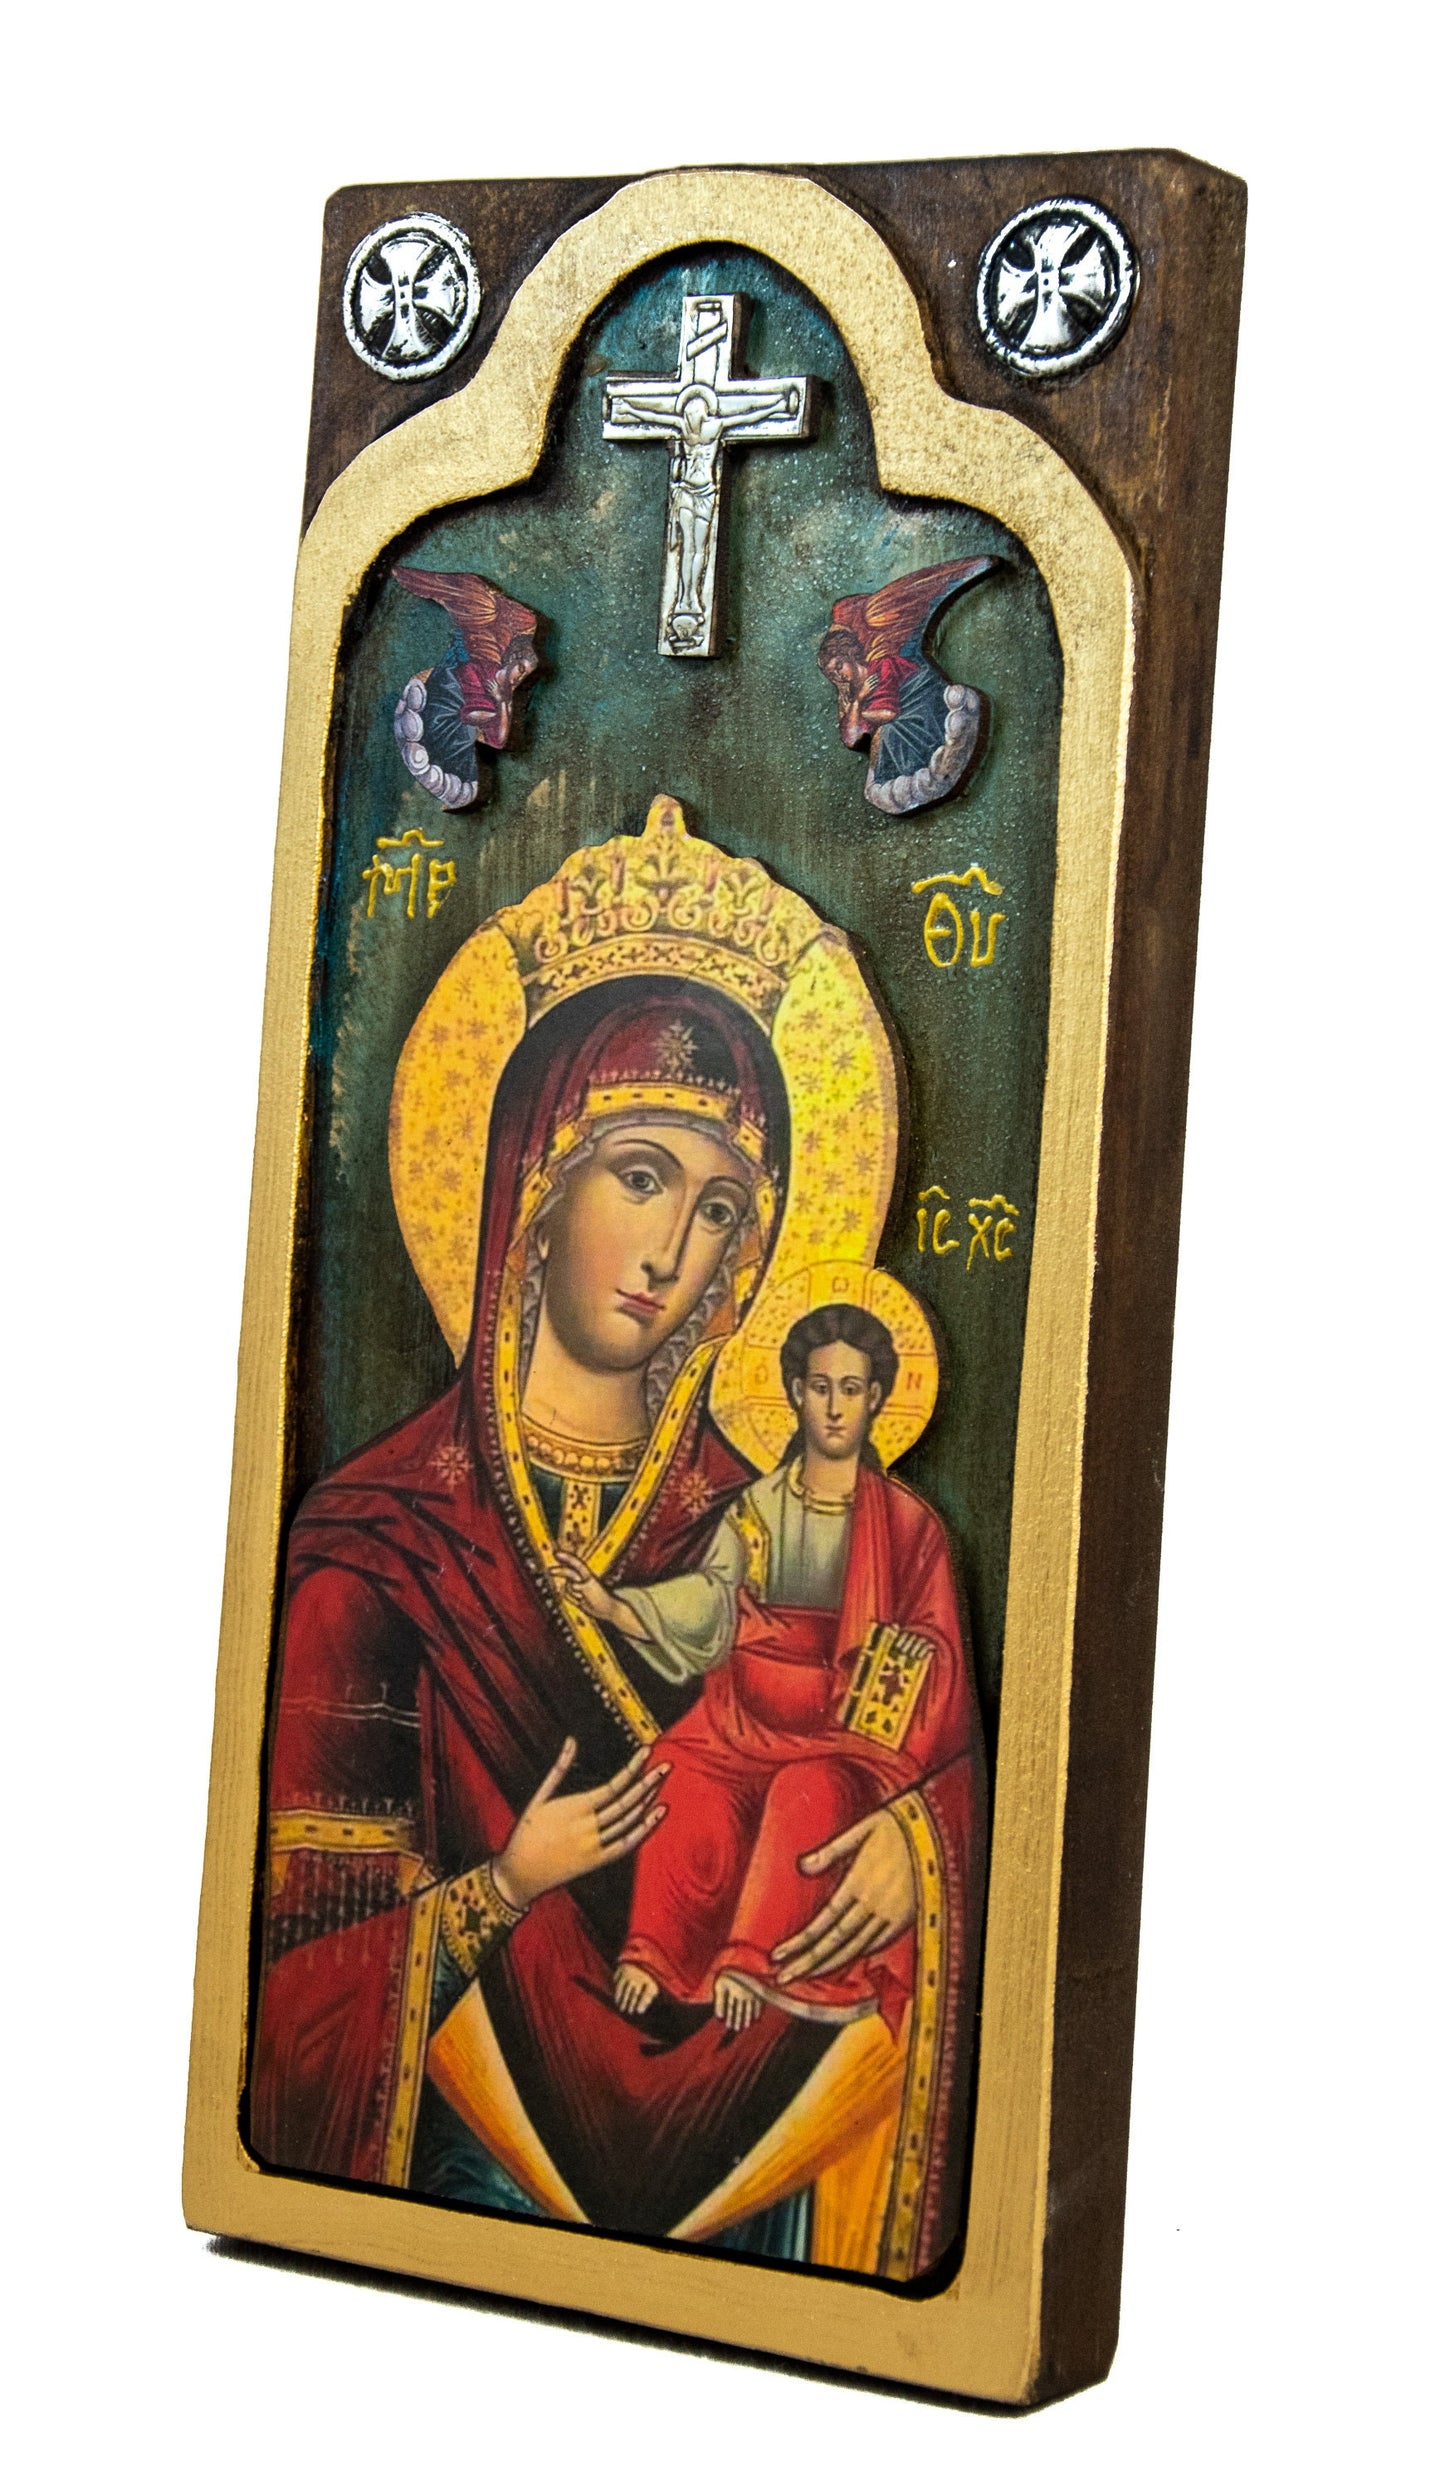 Virgin Mary icon Panagia Handmade Greek Christian Orthodox Icon Theotokos Mother of God Byzantine art wall hanging wood plaque gift 38x18cm TheHolyArt